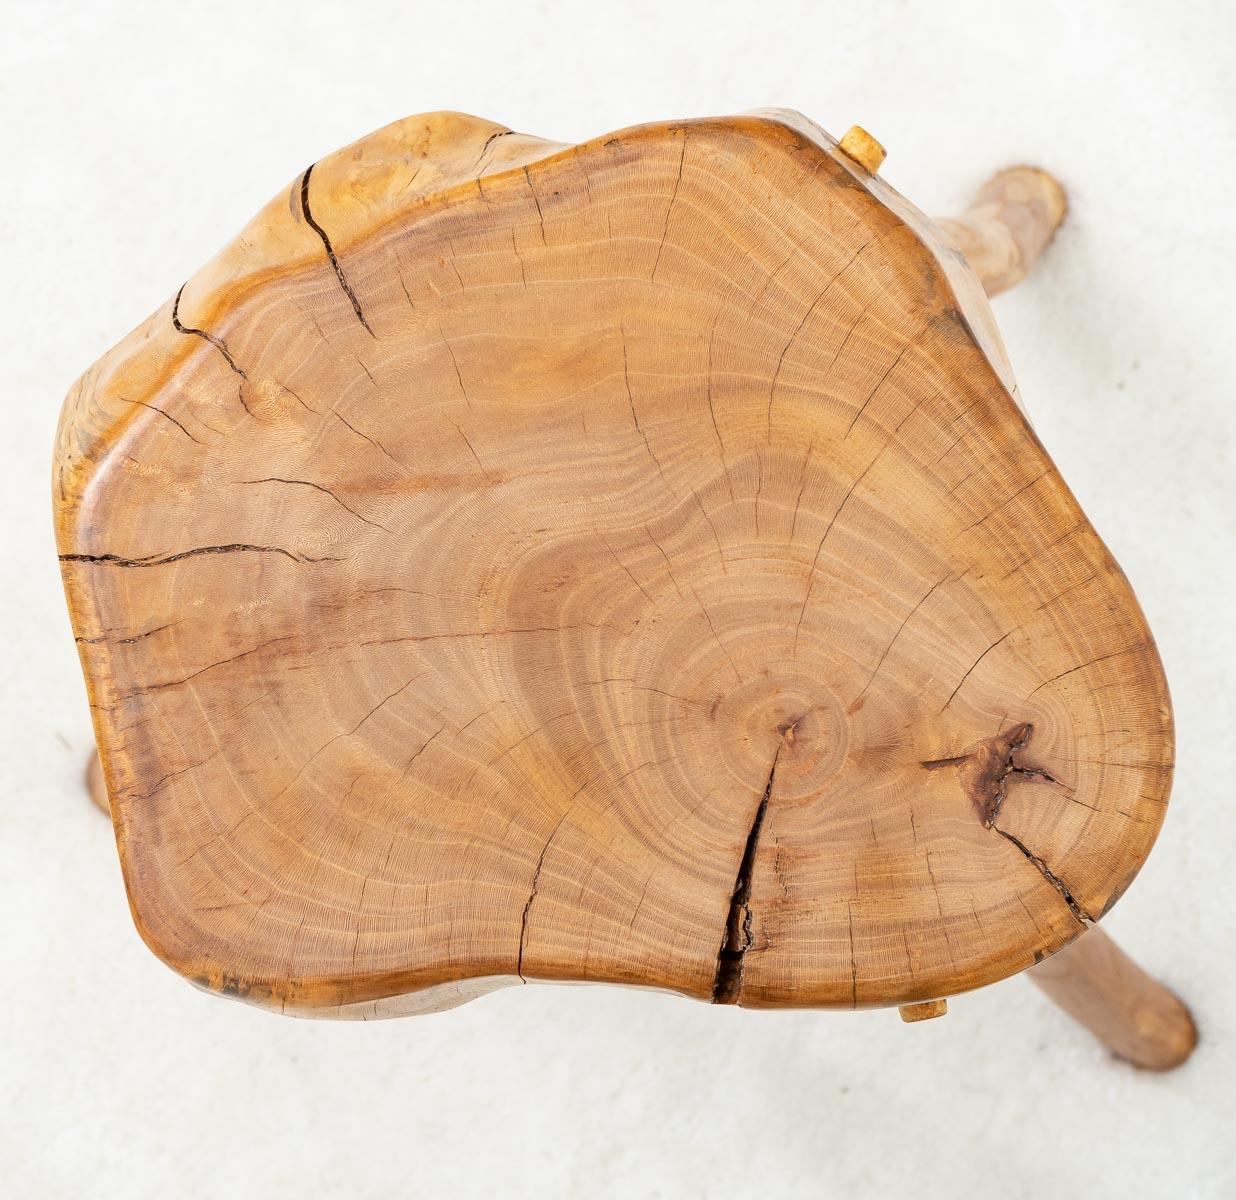 Solid Wood Set - Stools & Table - Jean Prouvé & Pierre Janneret - Period: XXth For Sale 4